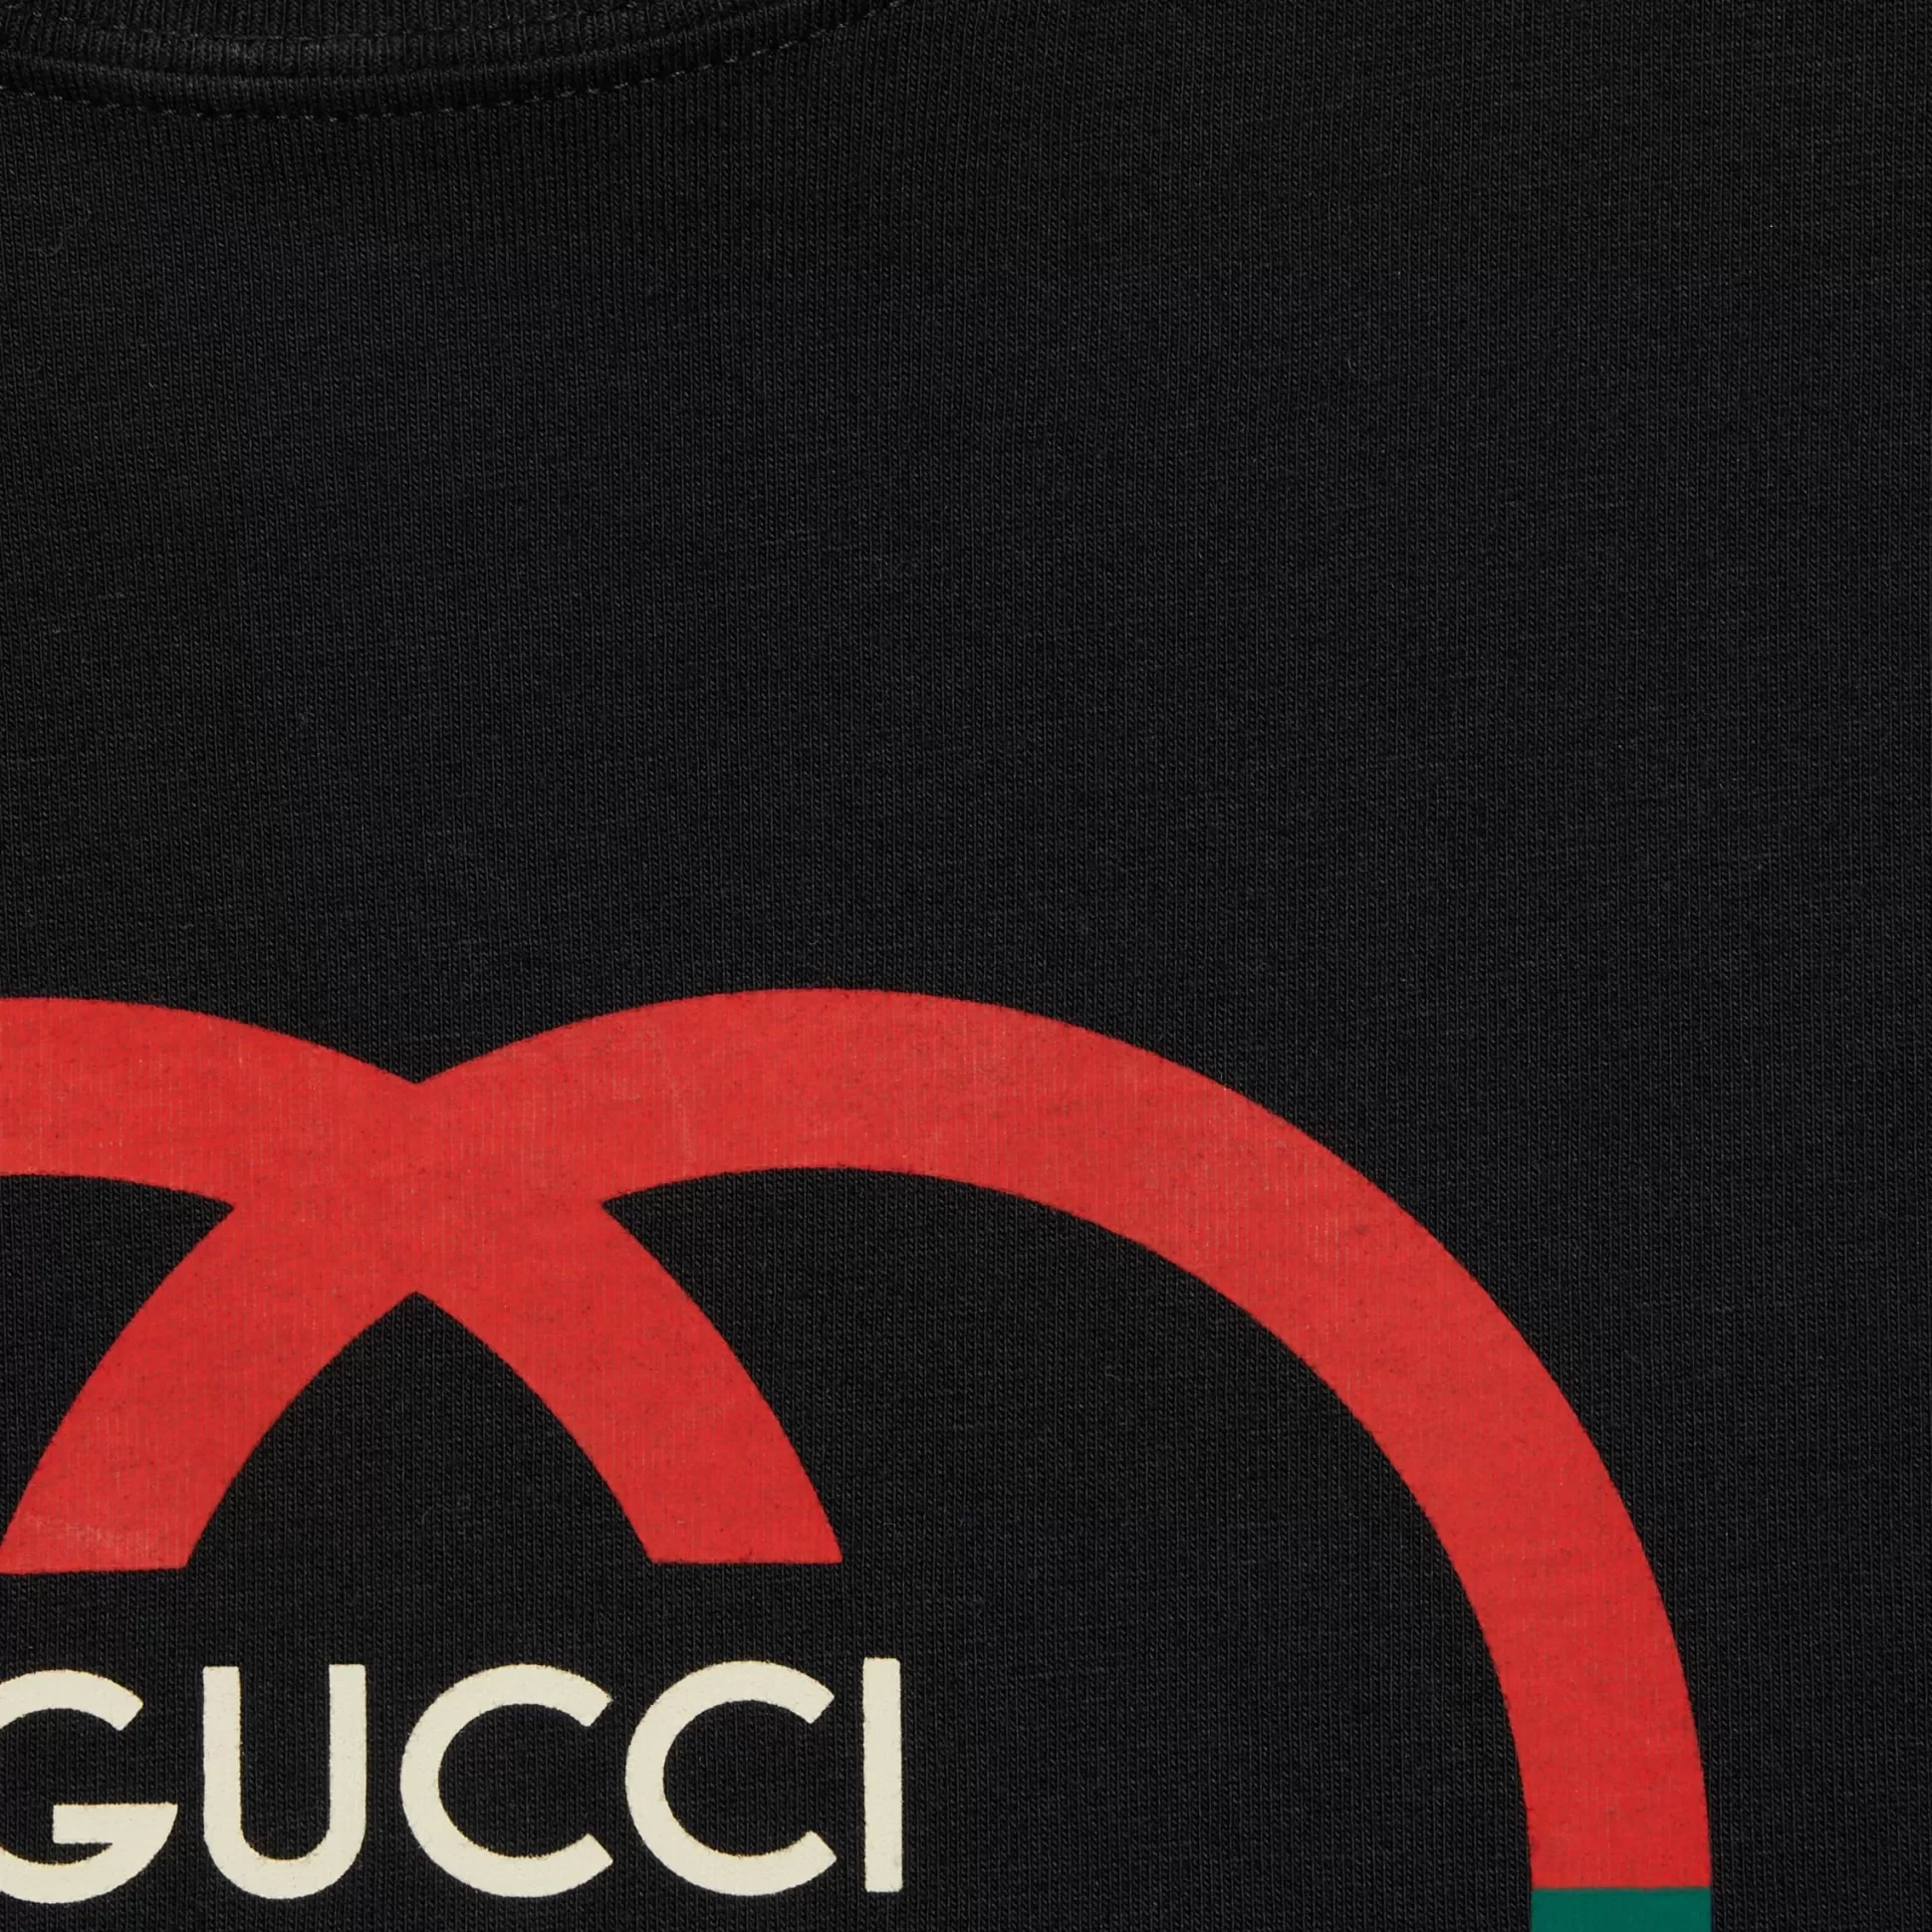 GUCCI Cotton Jersey Printed T-Shirt-Men T-Shirts & Polos